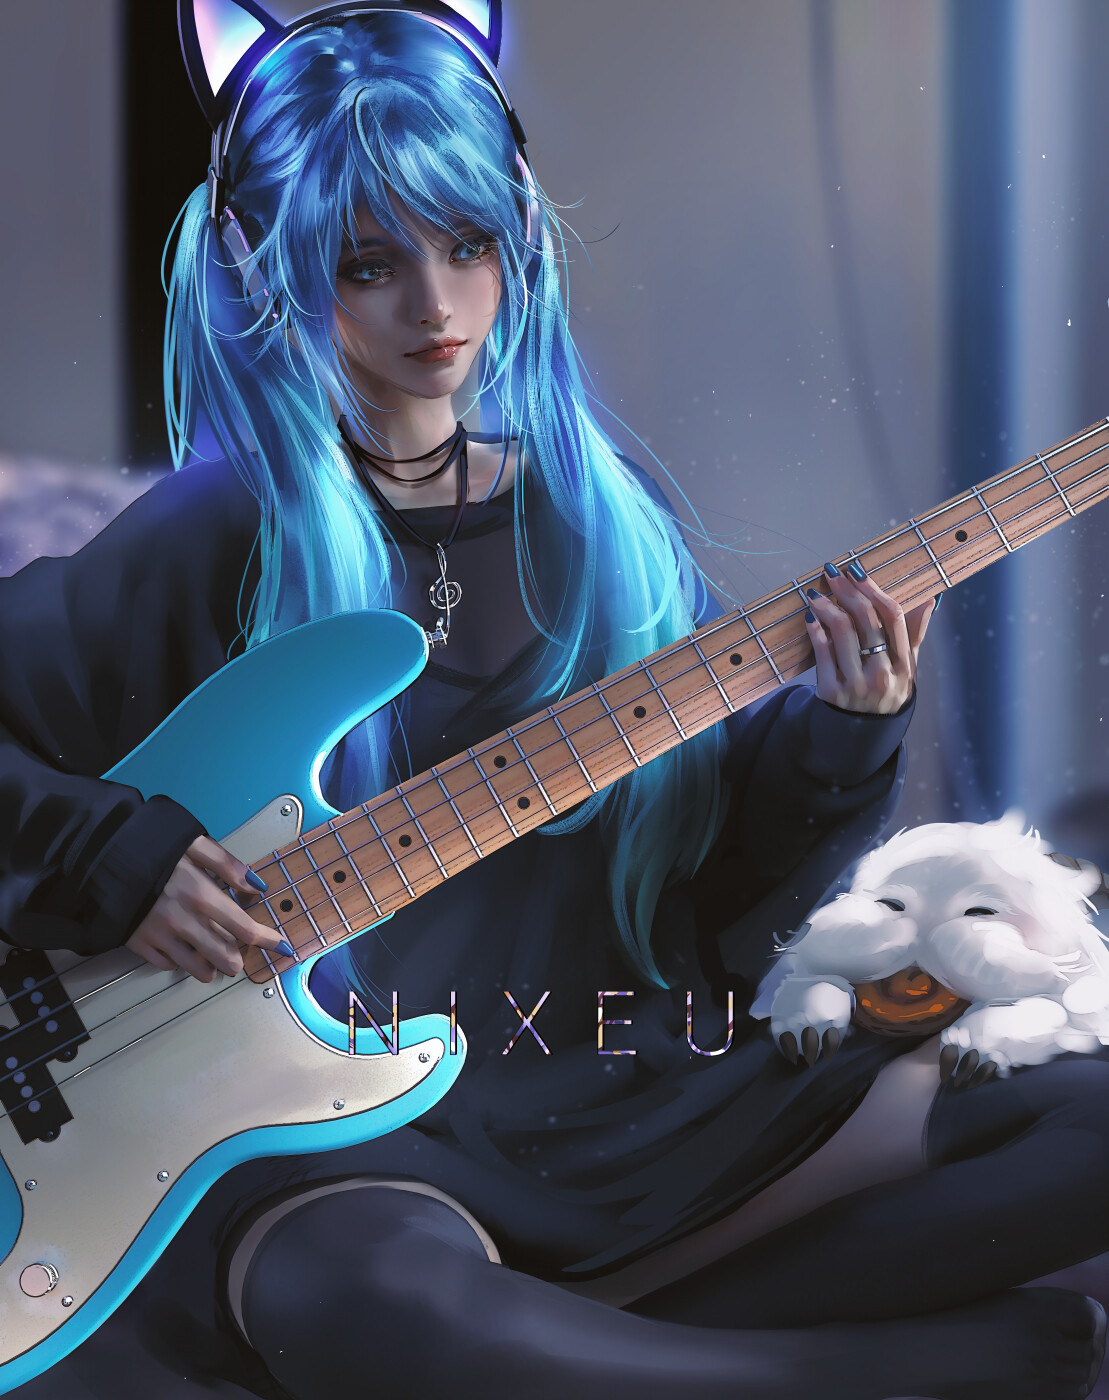 General 1109x1400 Nixeu drawing women Sona (League of Legends) blue hair blue eyes indoors bass guitars digital art